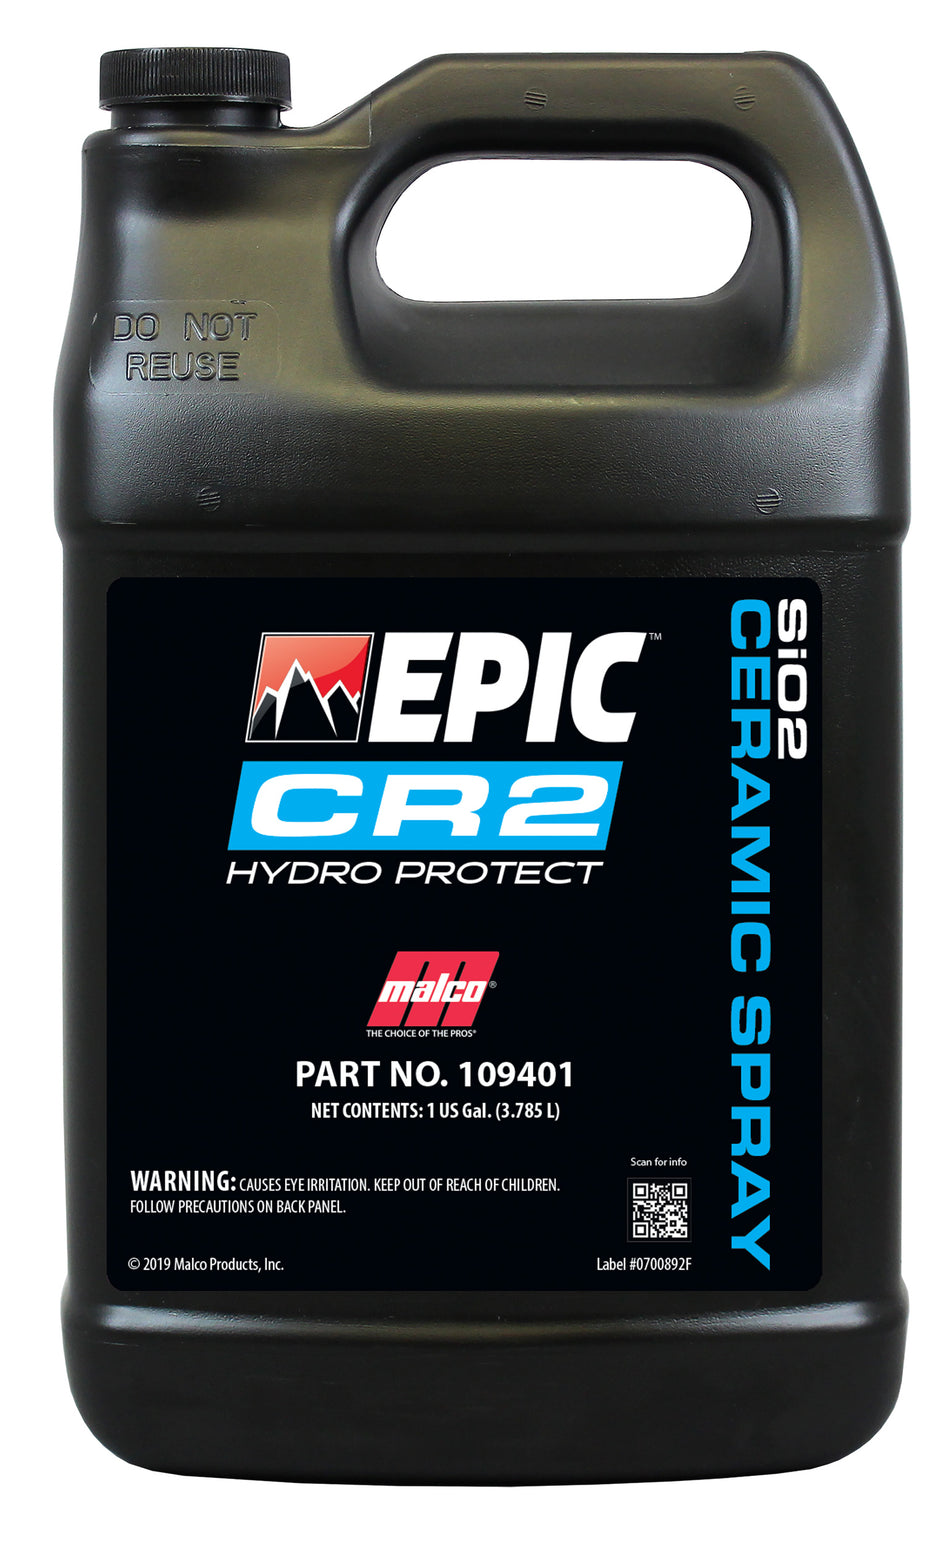 Malco EPIC CR2 Hydro Protect Cermaic